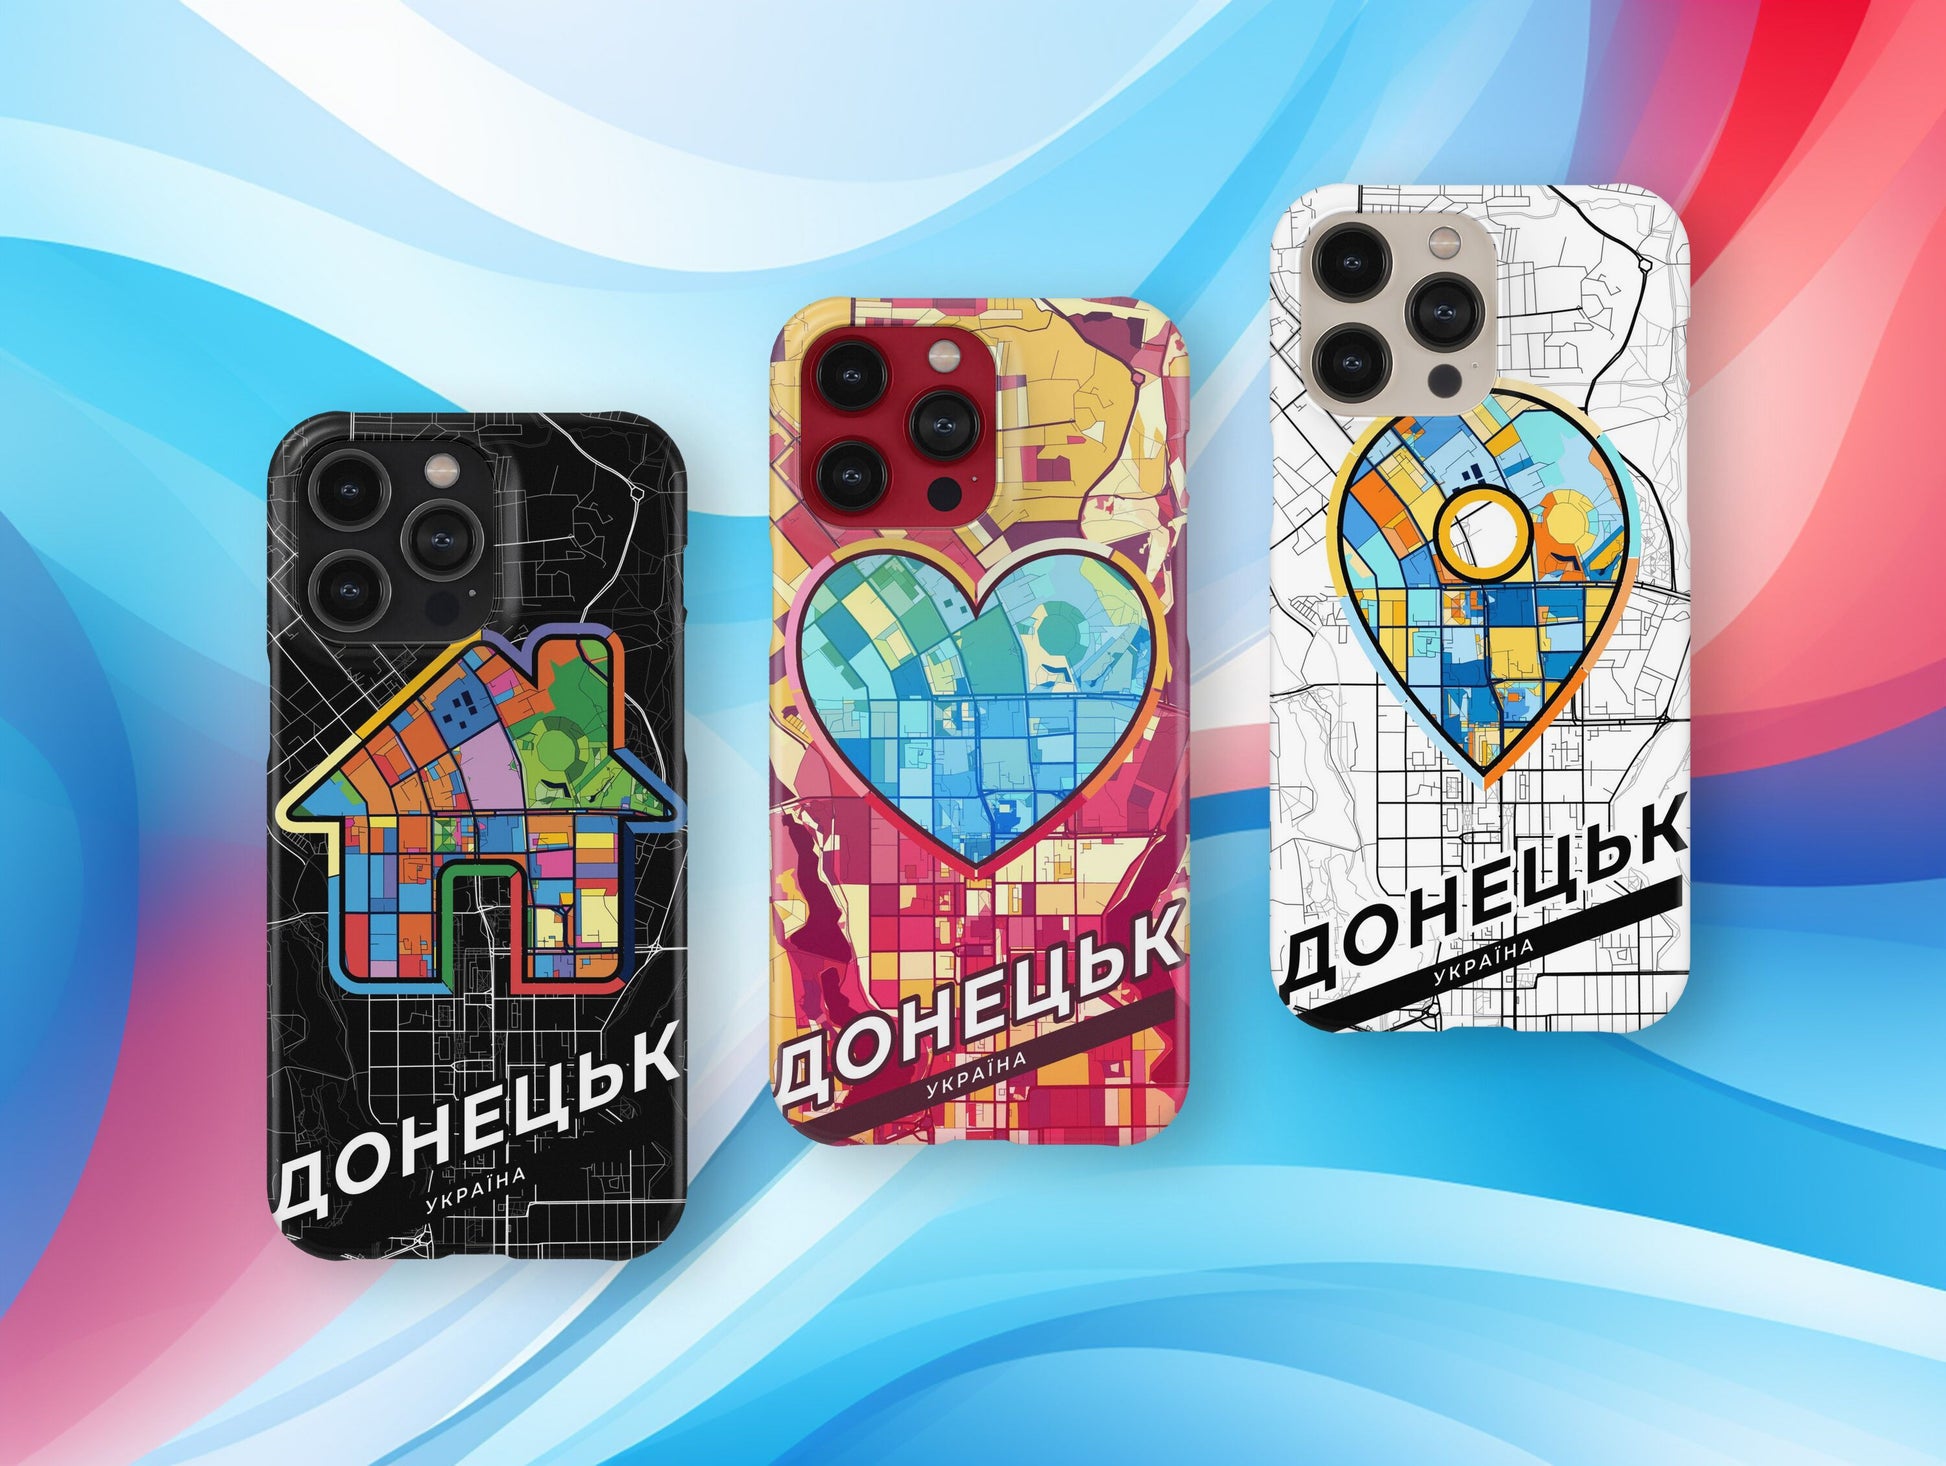 Donetsk Ukraine slim phone case with colorful icon. Birthday, wedding or housewarming gift. Couple match cases.